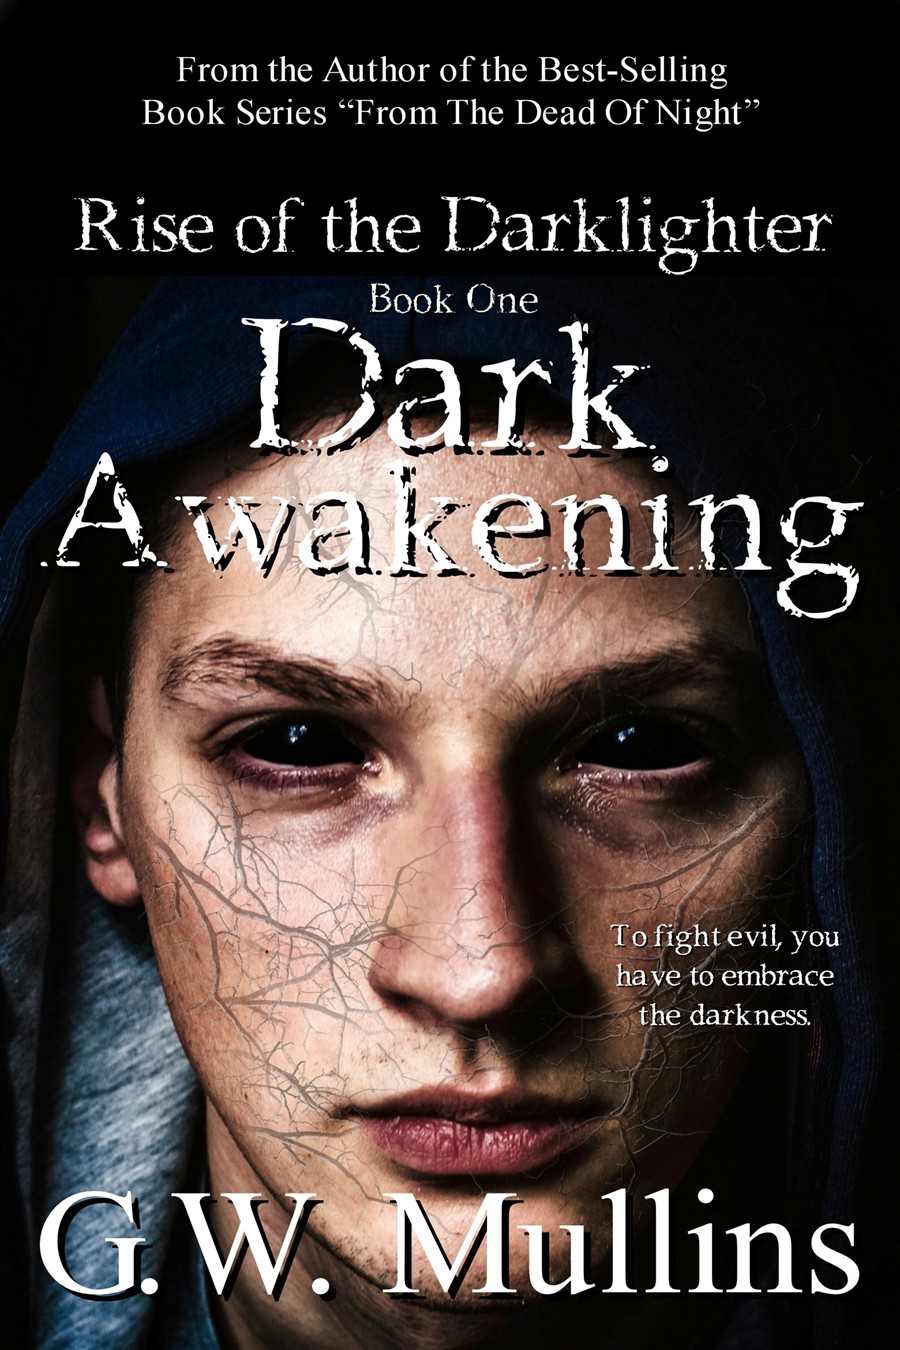 The Angel Of Death Returns In New G.W. Mullins Paranormal YA Thriller Novel "Rise Of The Dark Lighter – Dark Awakening"